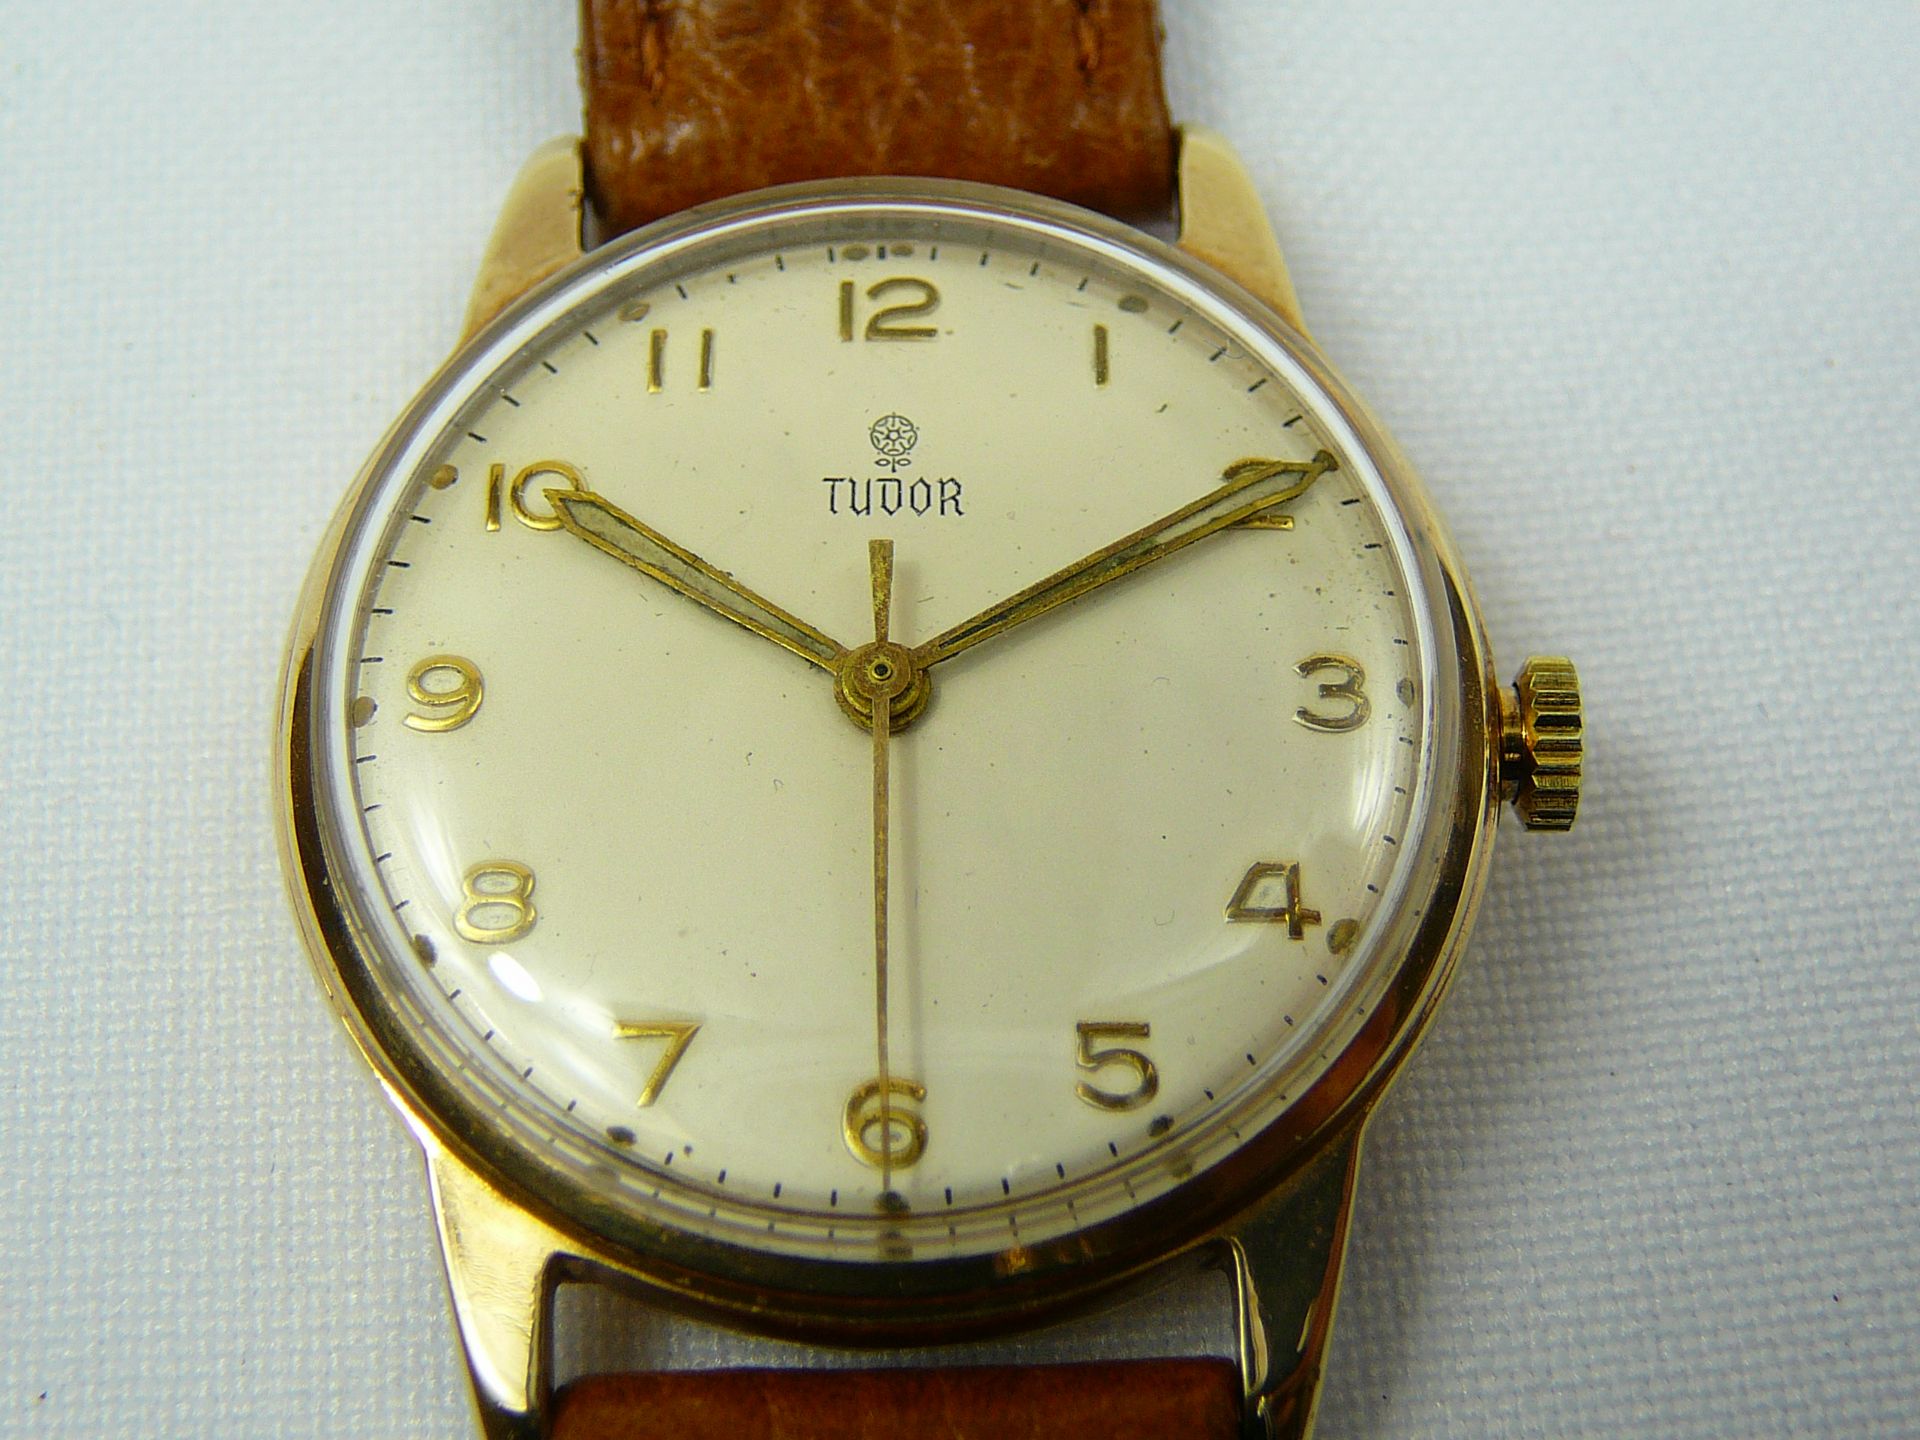 Gents gold Tudor wrist watch - Image 2 of 3